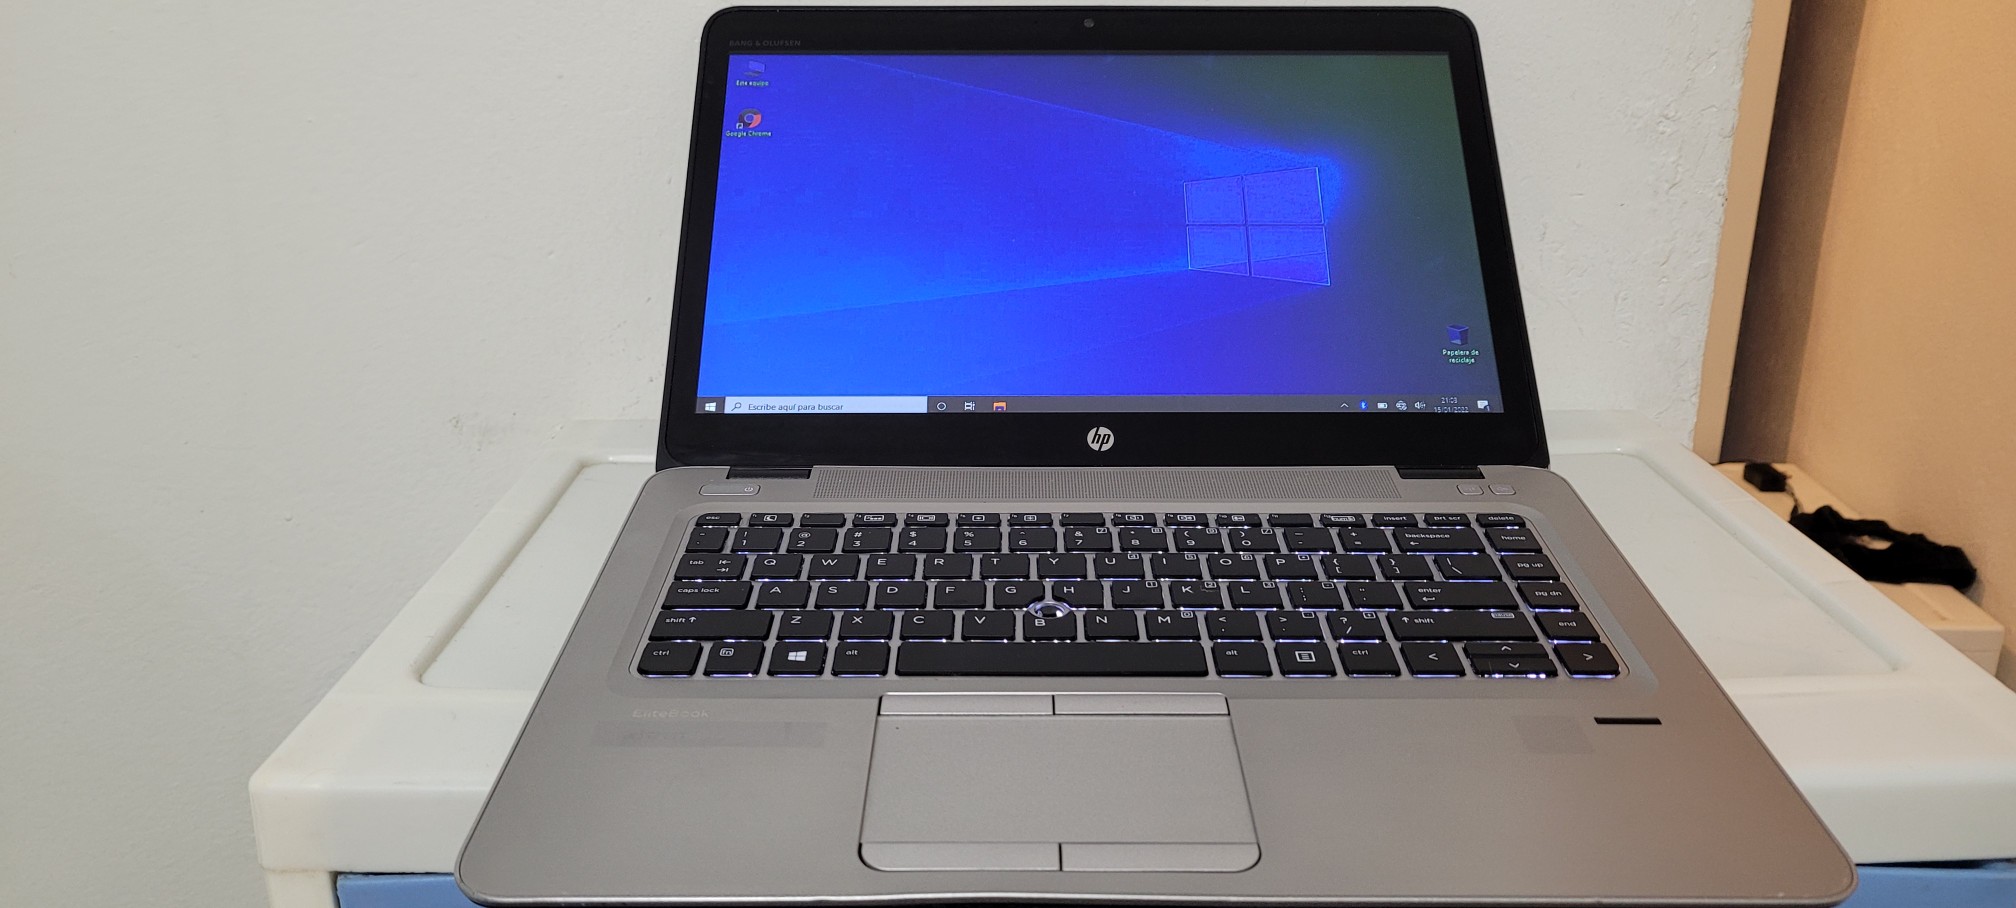 computadoras y laptops - Laptop hp Slim G2 14 Pulg Core i5 6ta Ram 8gb ddr4 Disco 500gb SSD 1080p 0